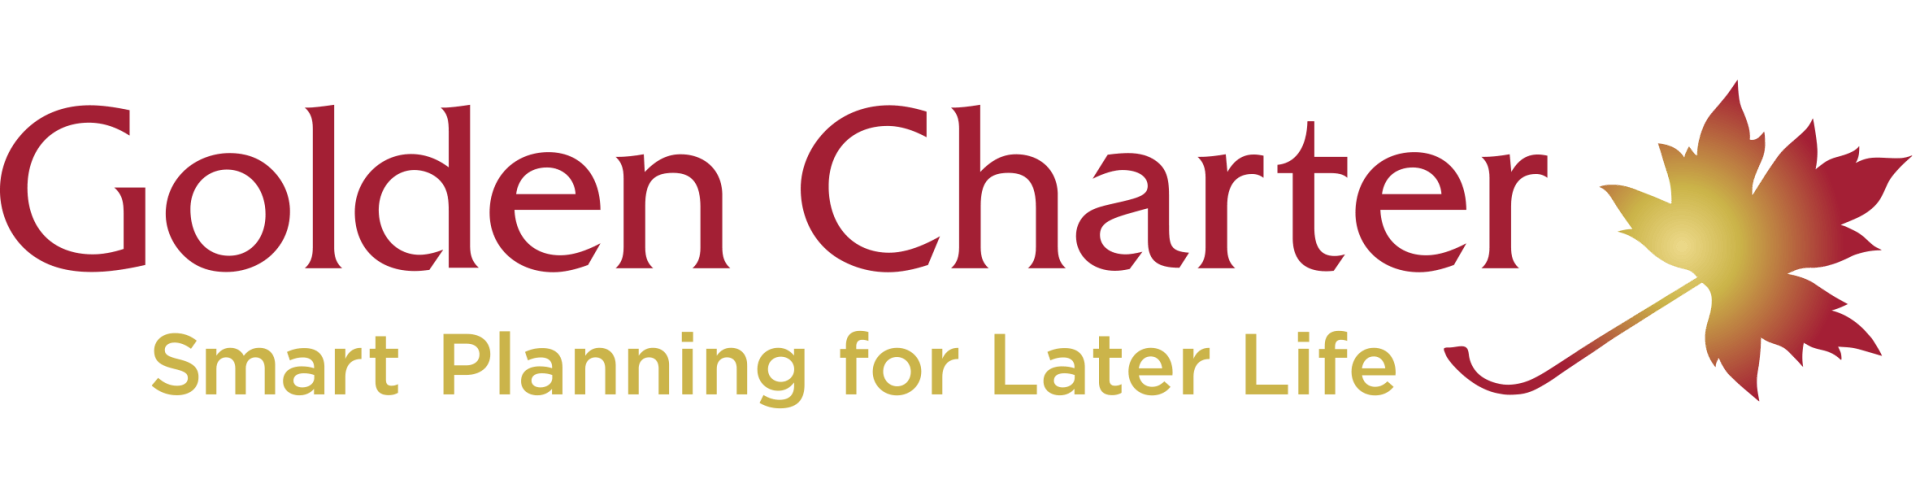 Golden Charter Funeral plans logo 